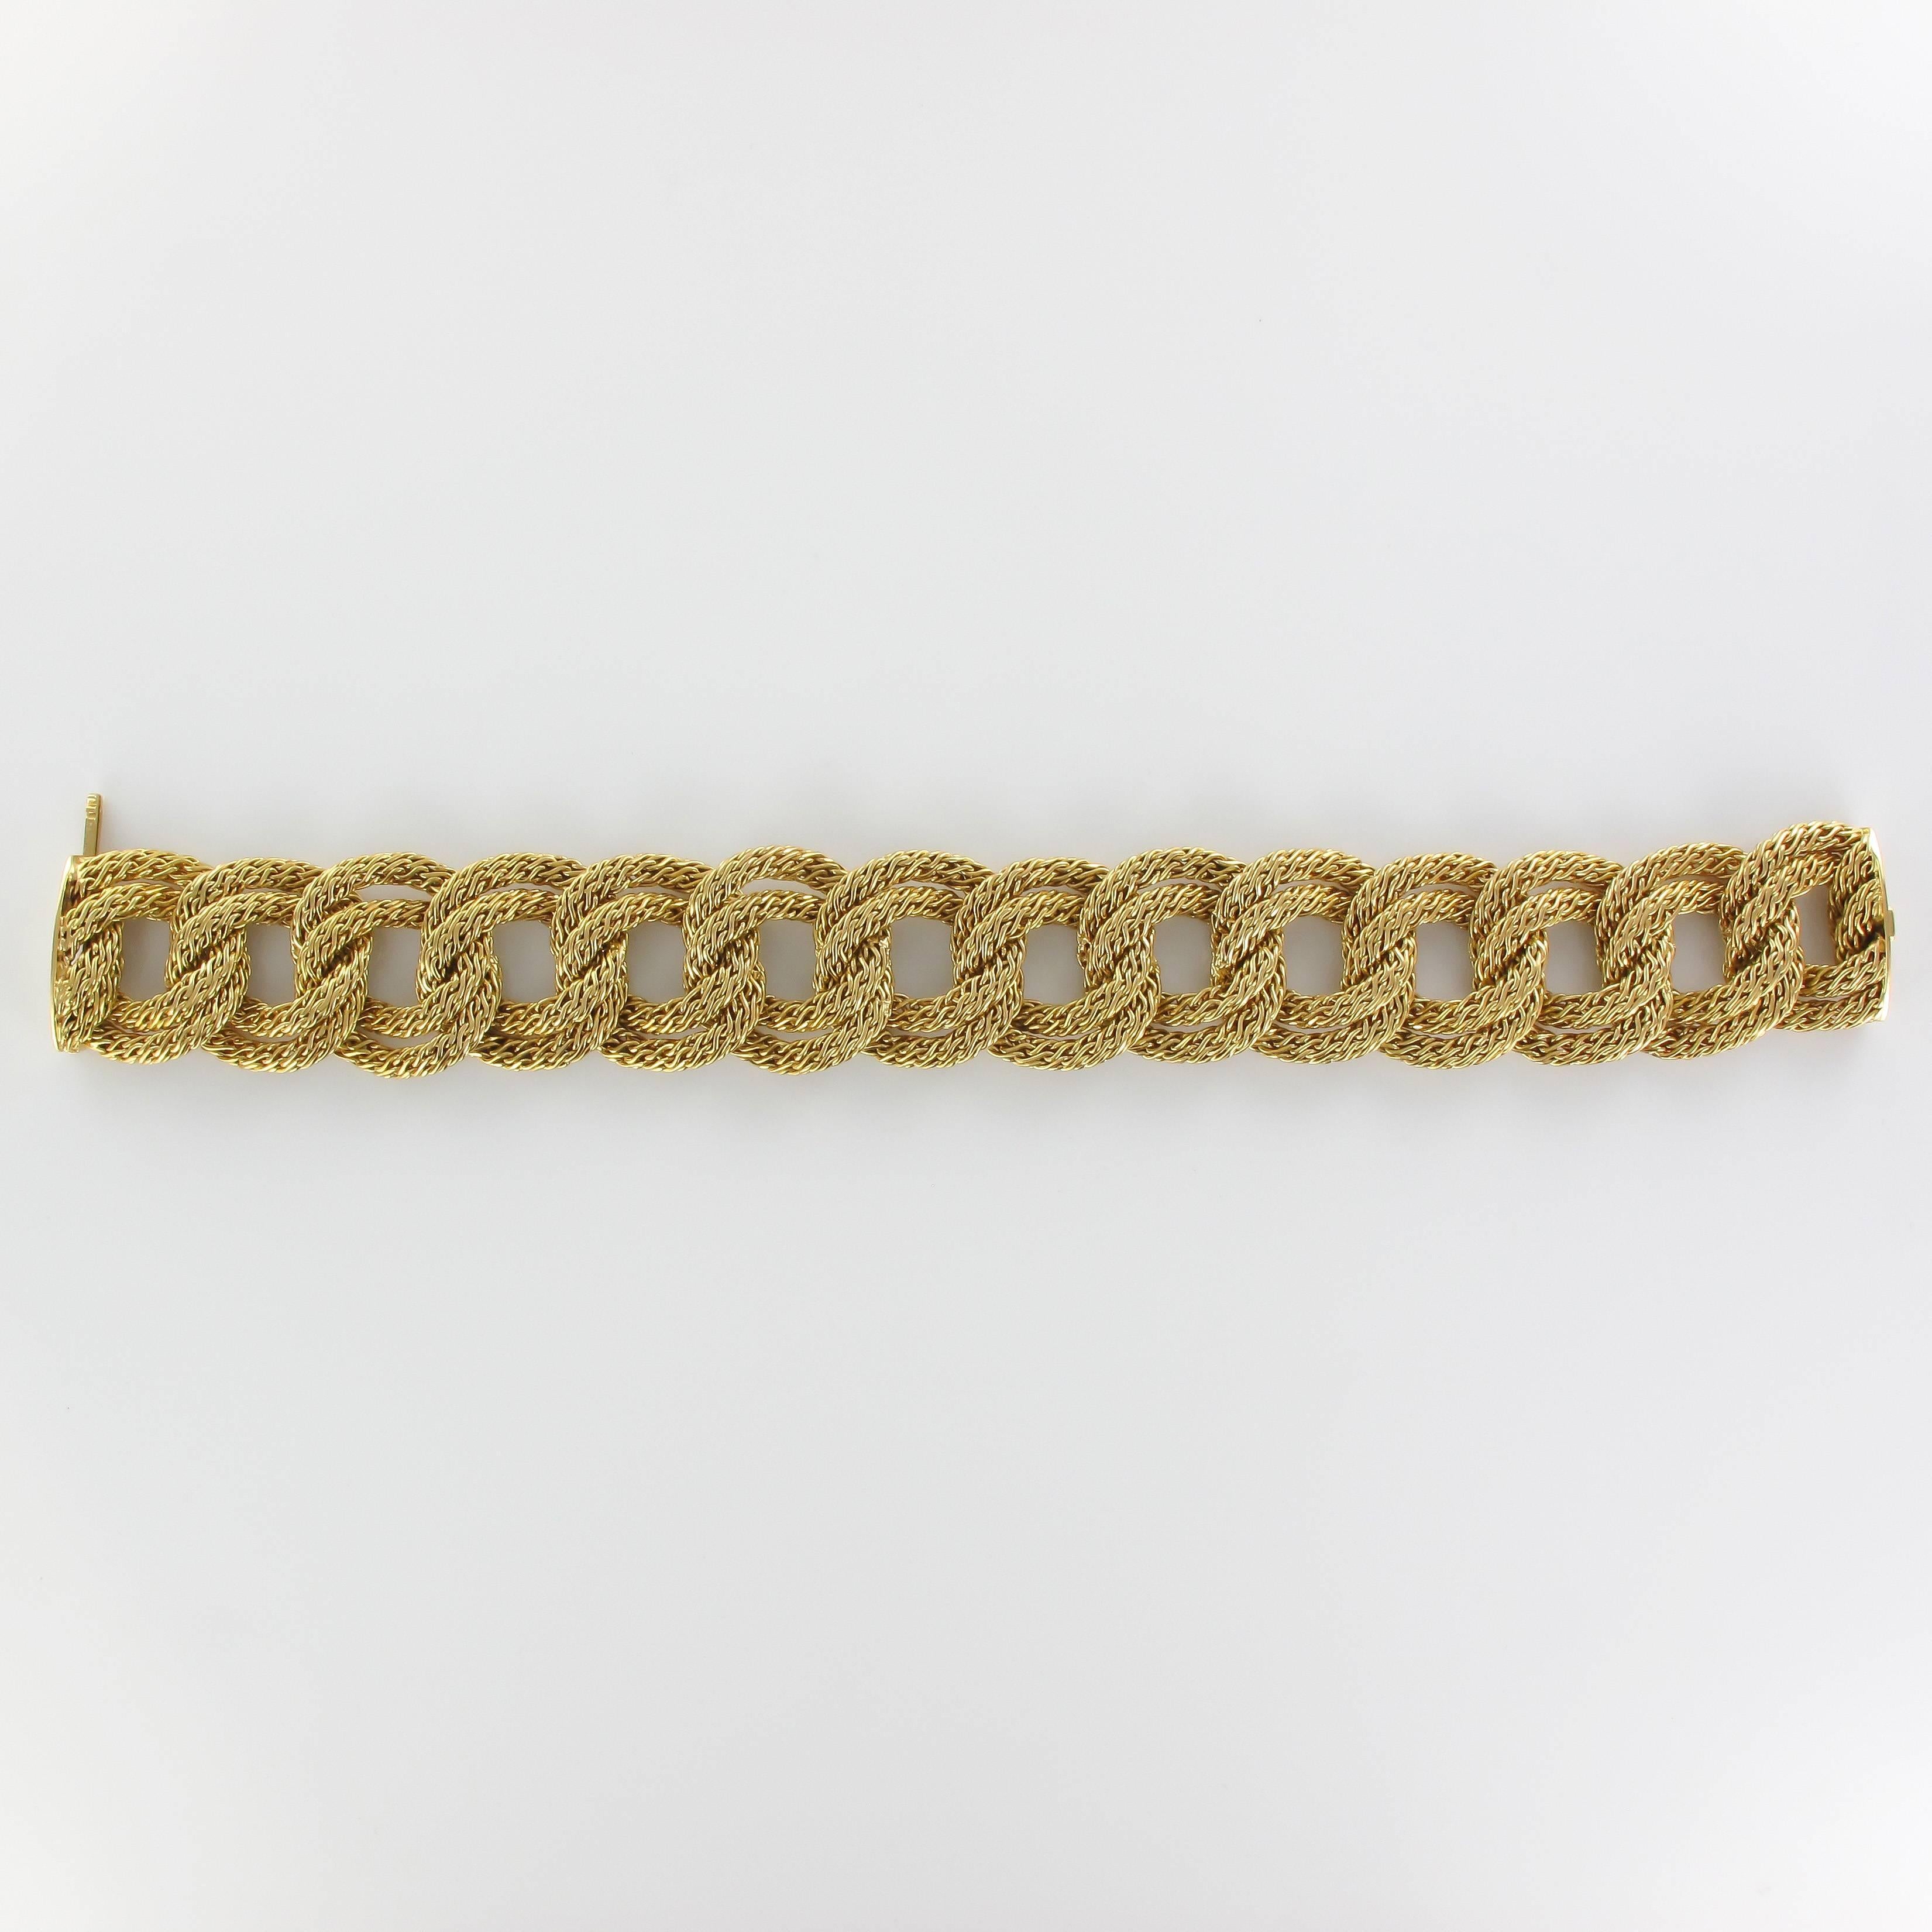 Retro 1960s French Wide Gold Braid Link Bracelet